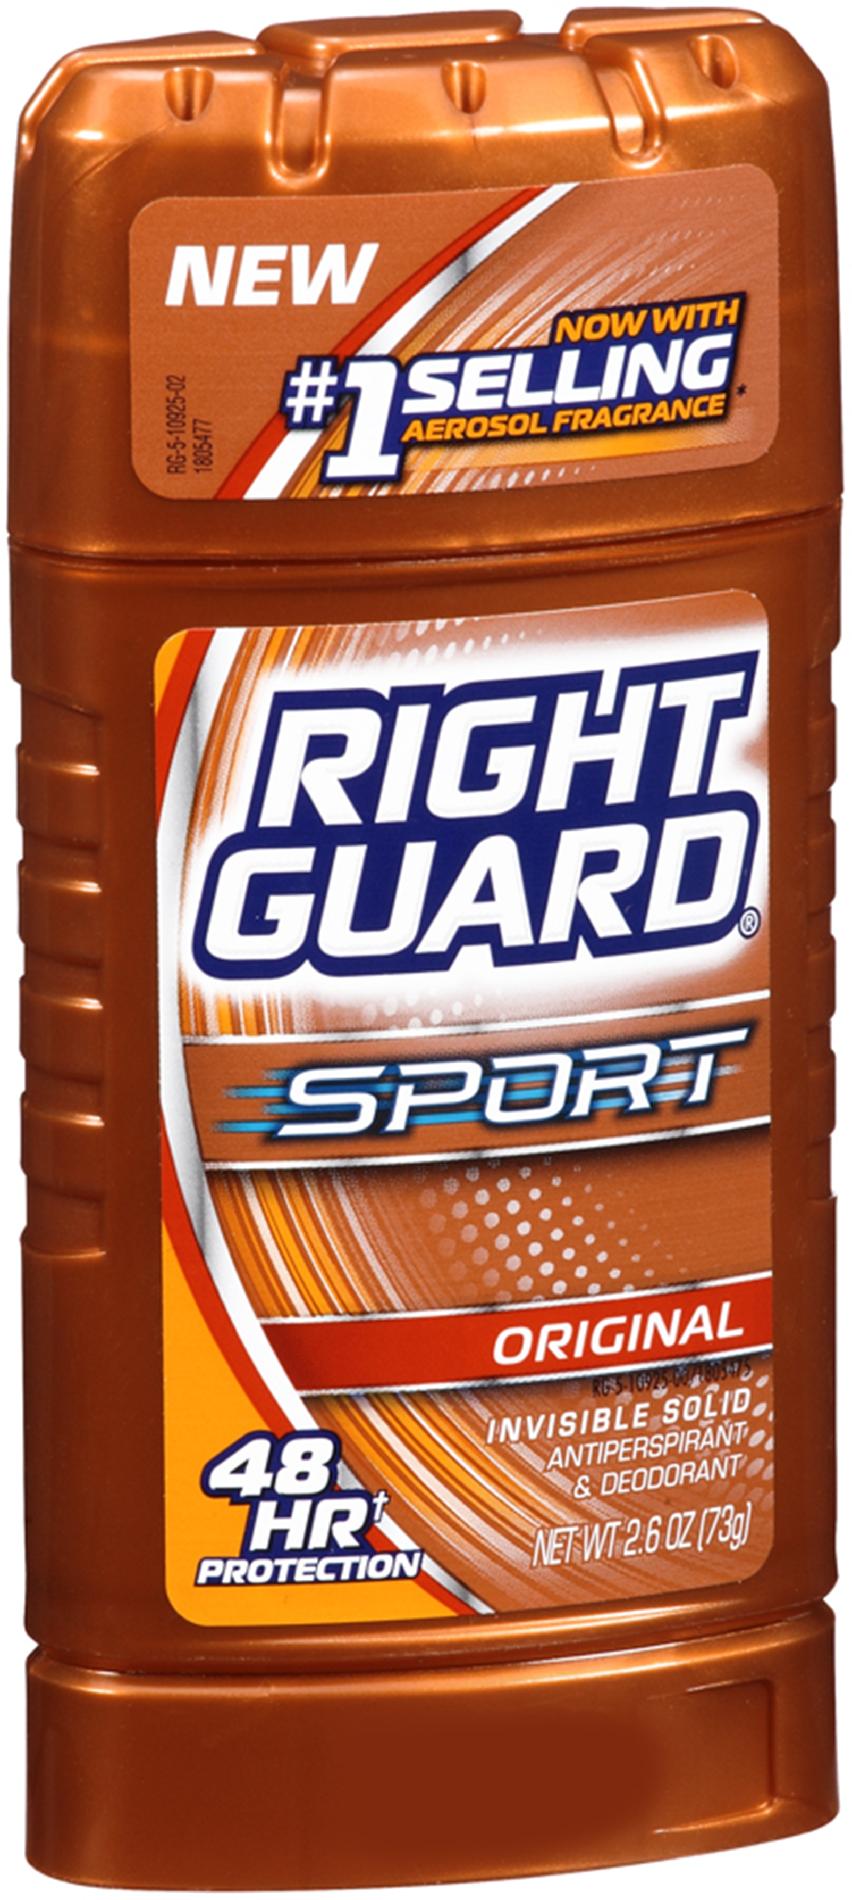 Right Guard Men's Antiperspirant & Deodorant, Original Sport, 2.6 OZ